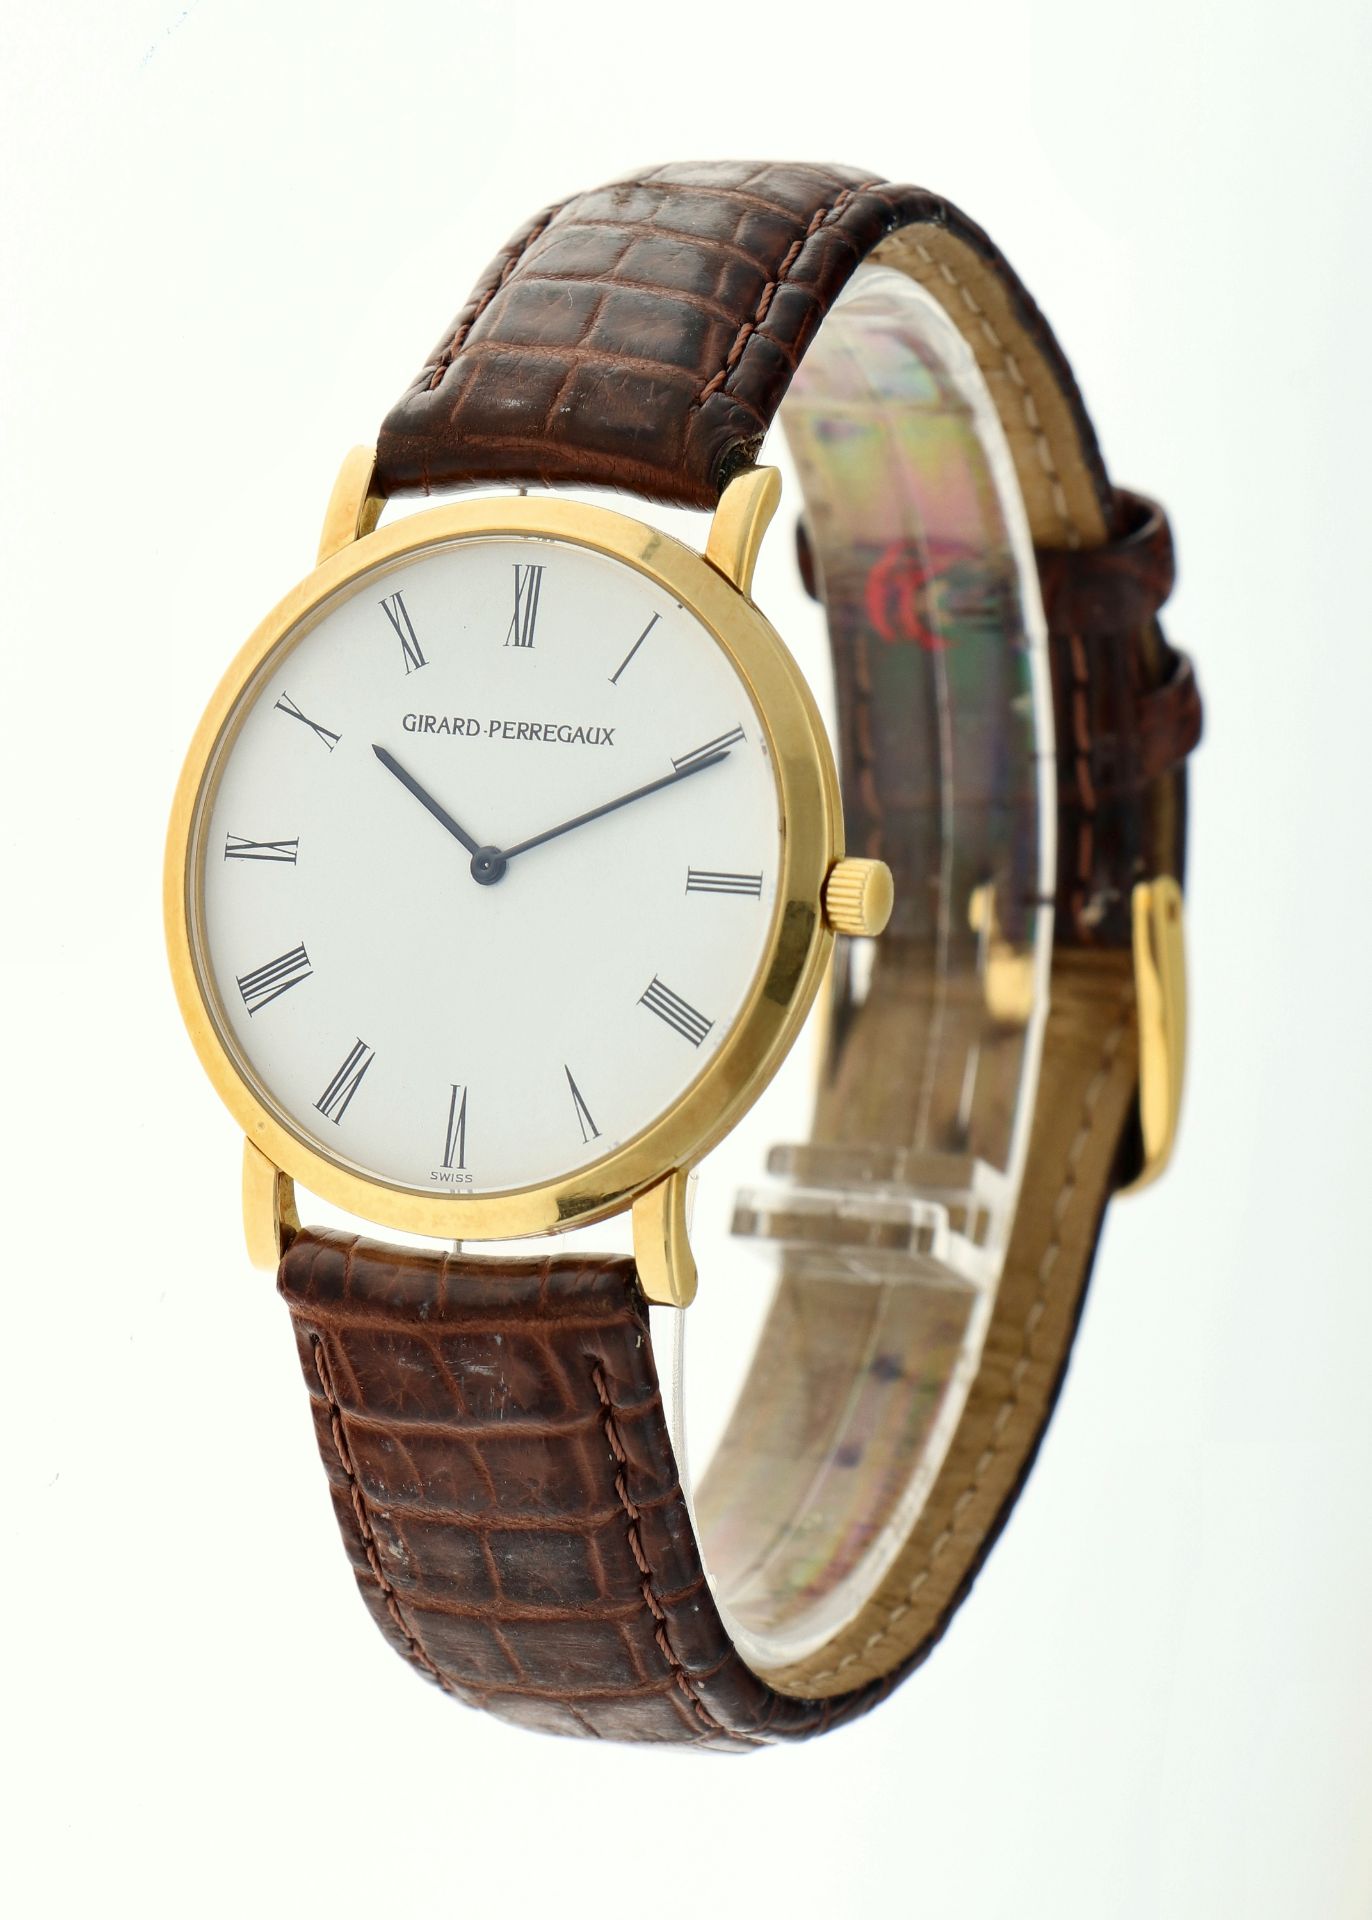 Girard Perregaux Classique Elegance 4762 - Men's watch. - Image 2 of 6